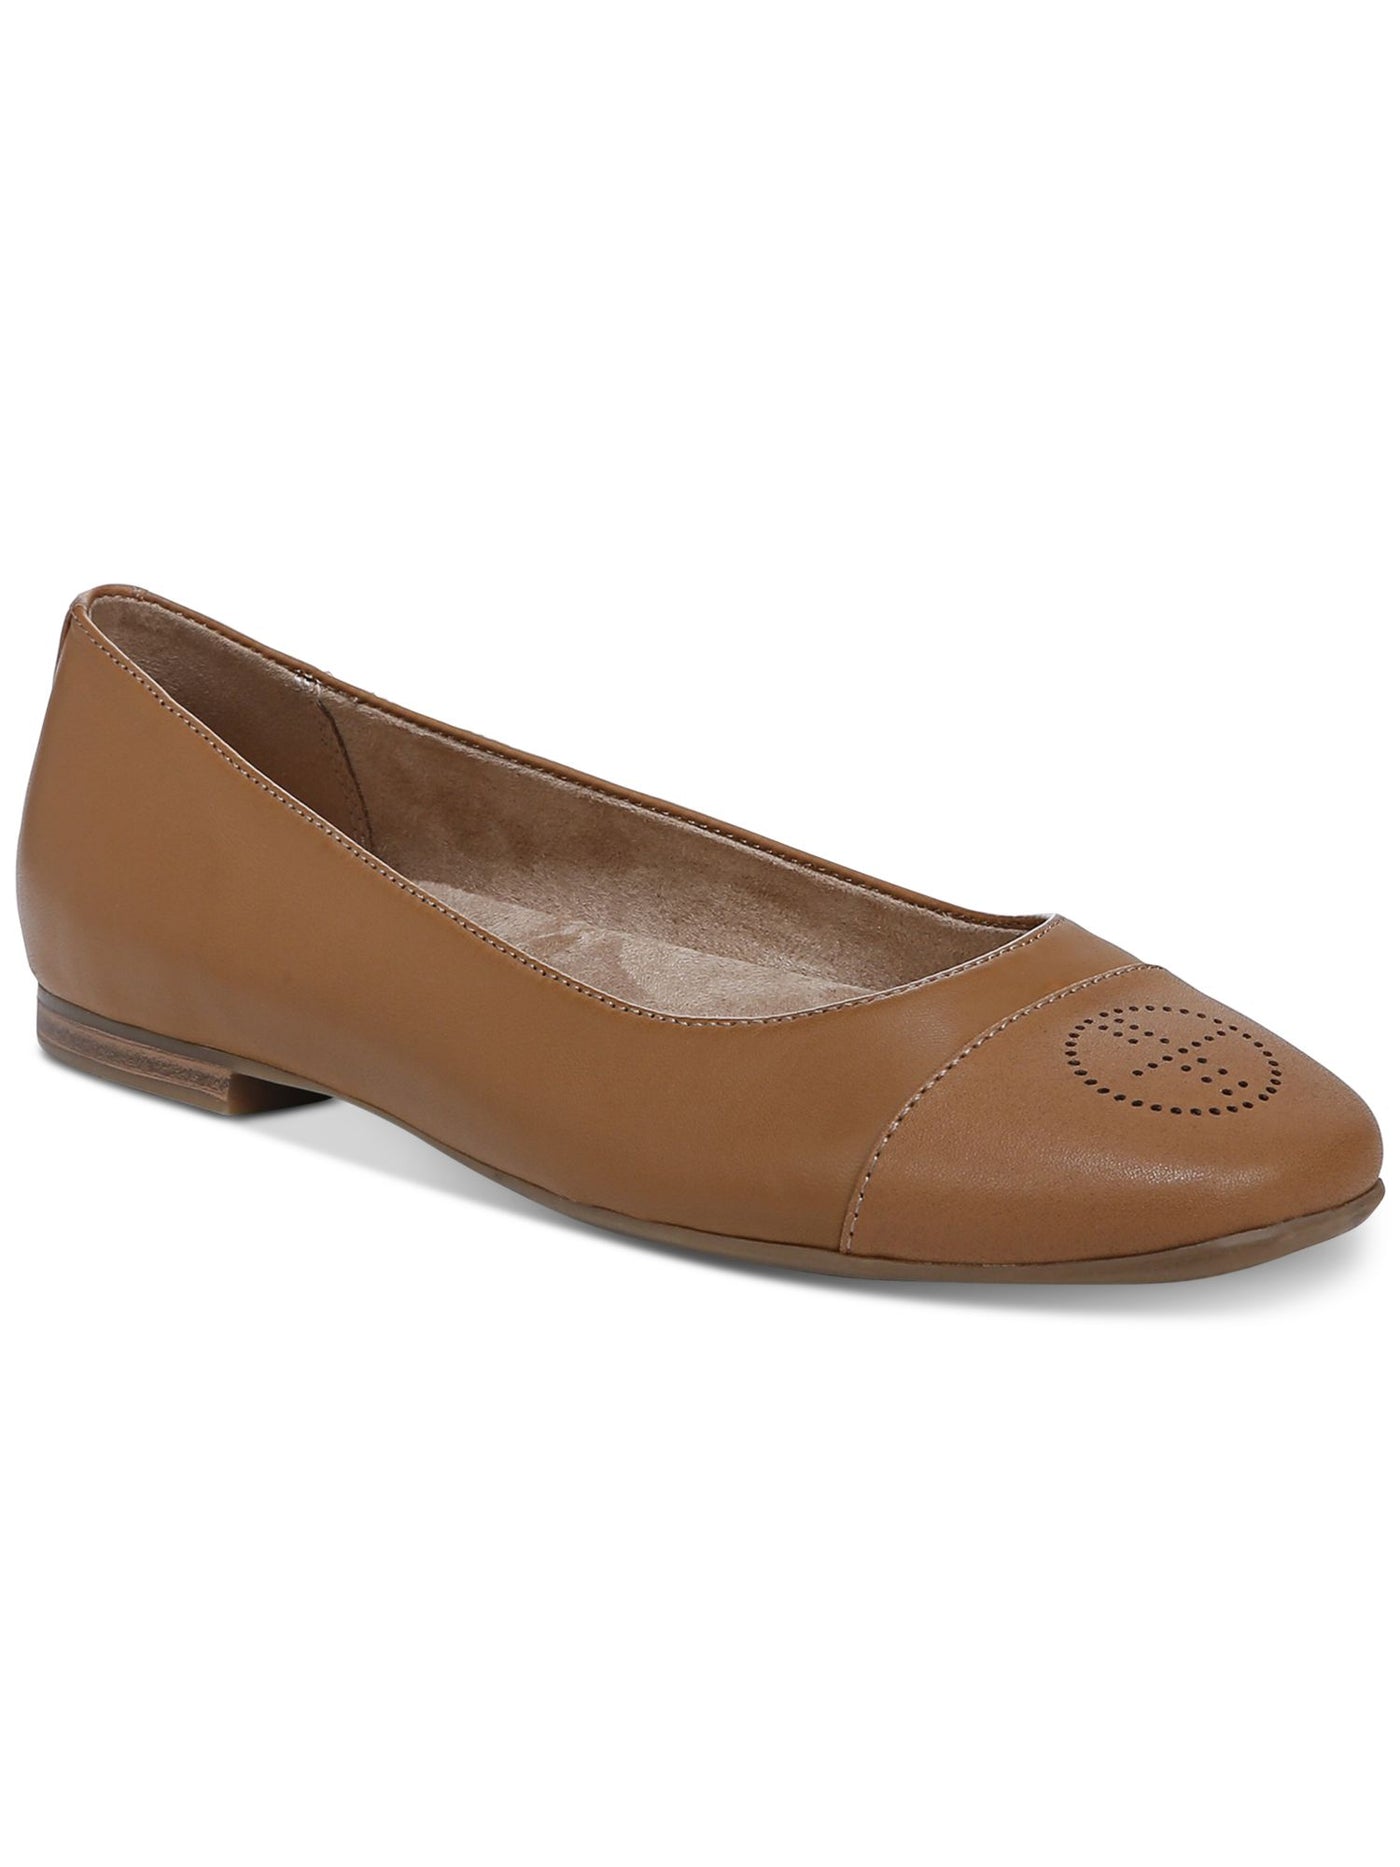 GIANI BERNINI Womens Brown Comfort Perforated Cushioned Aerinn Square Toe Slip On Flats Shoes 10 M